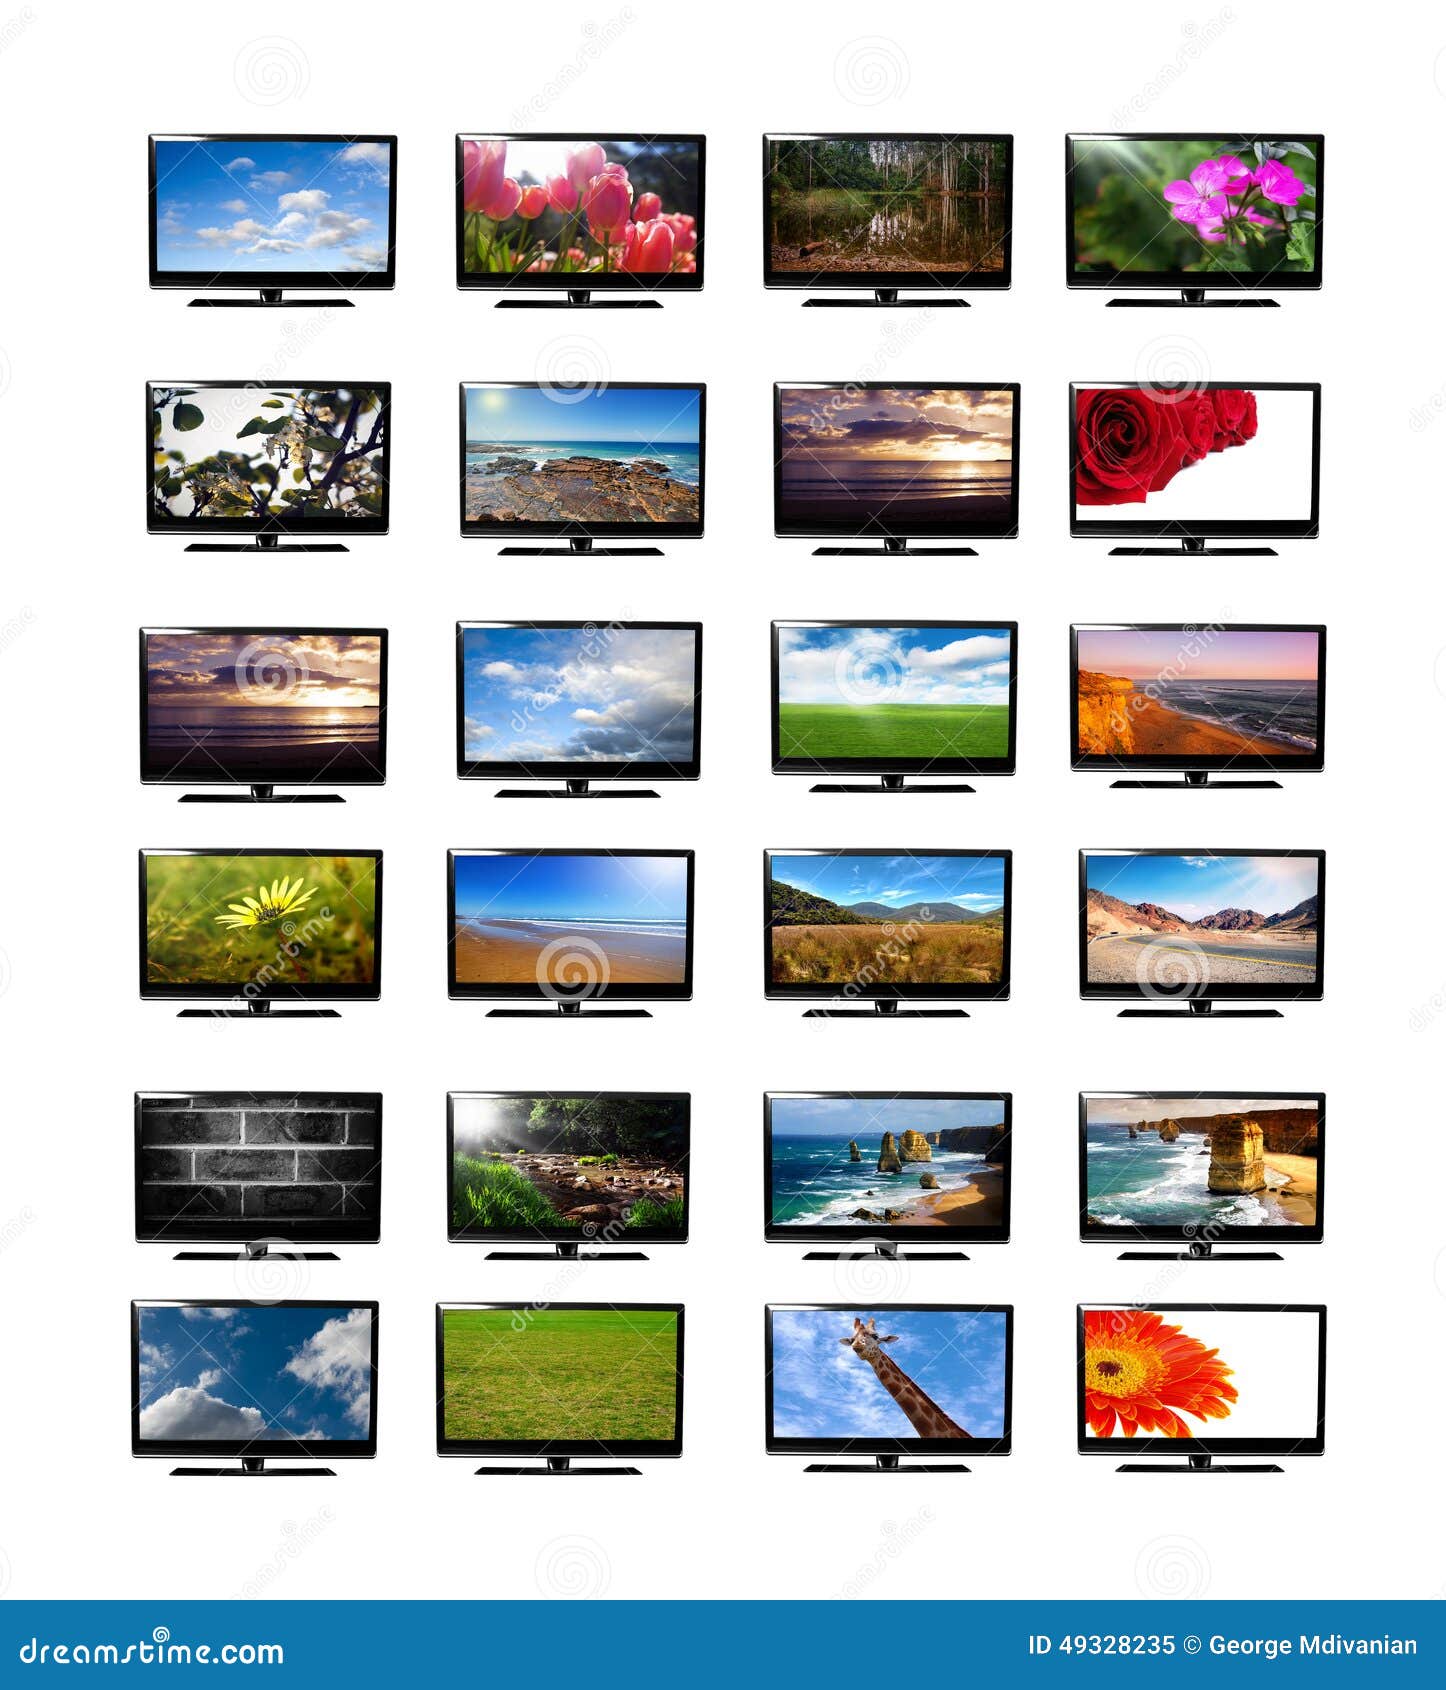 Tv monitors stock image. Image of home, screen, nature - 49328235